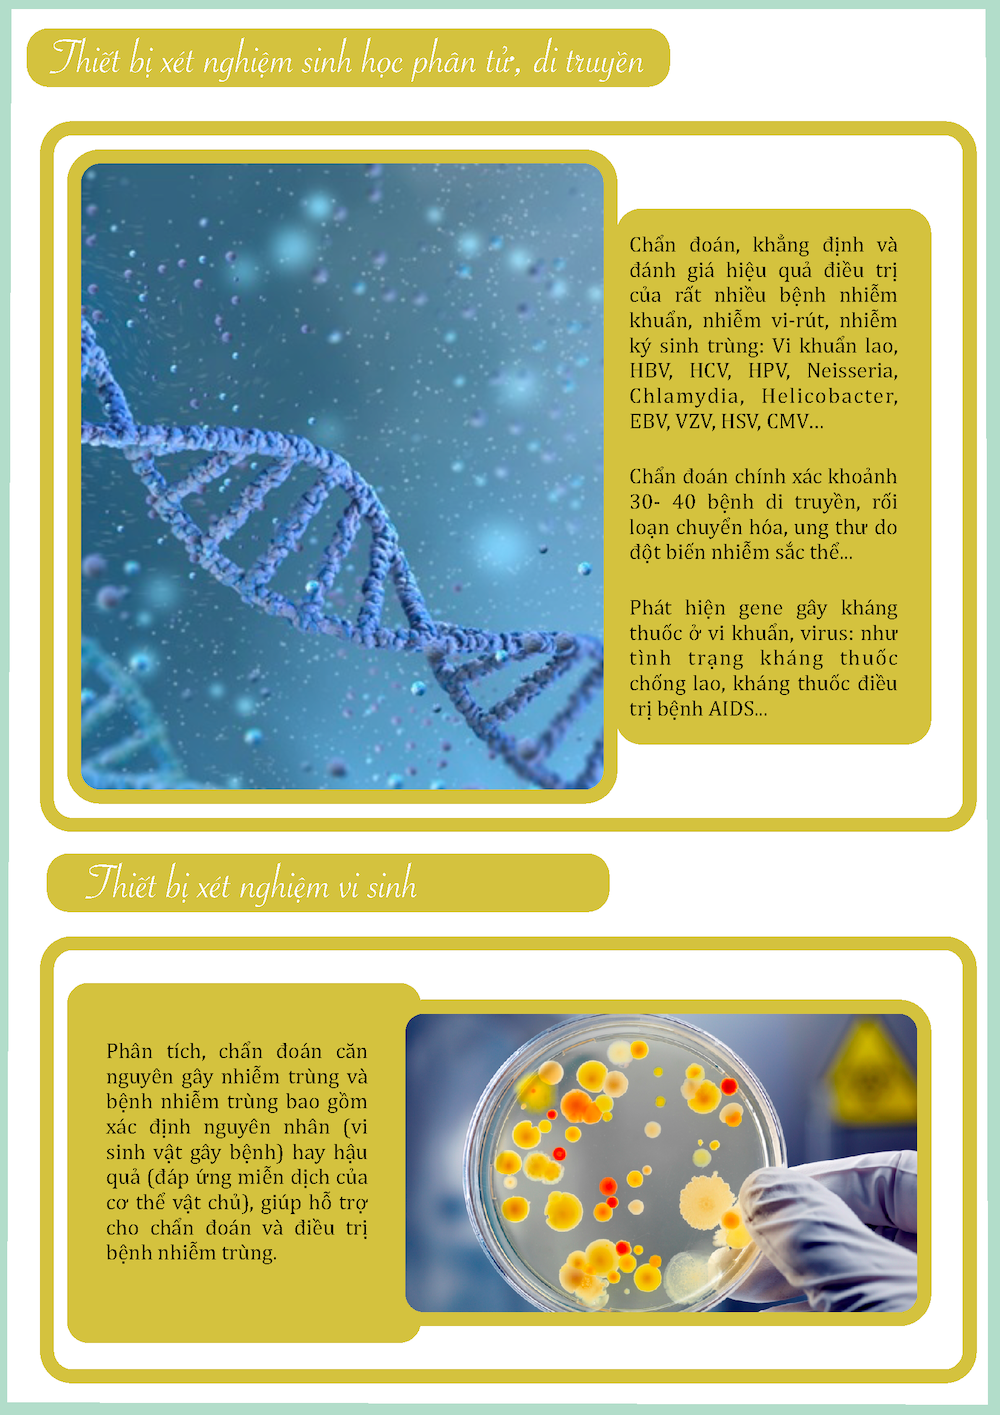 Molecular and genetic biological test